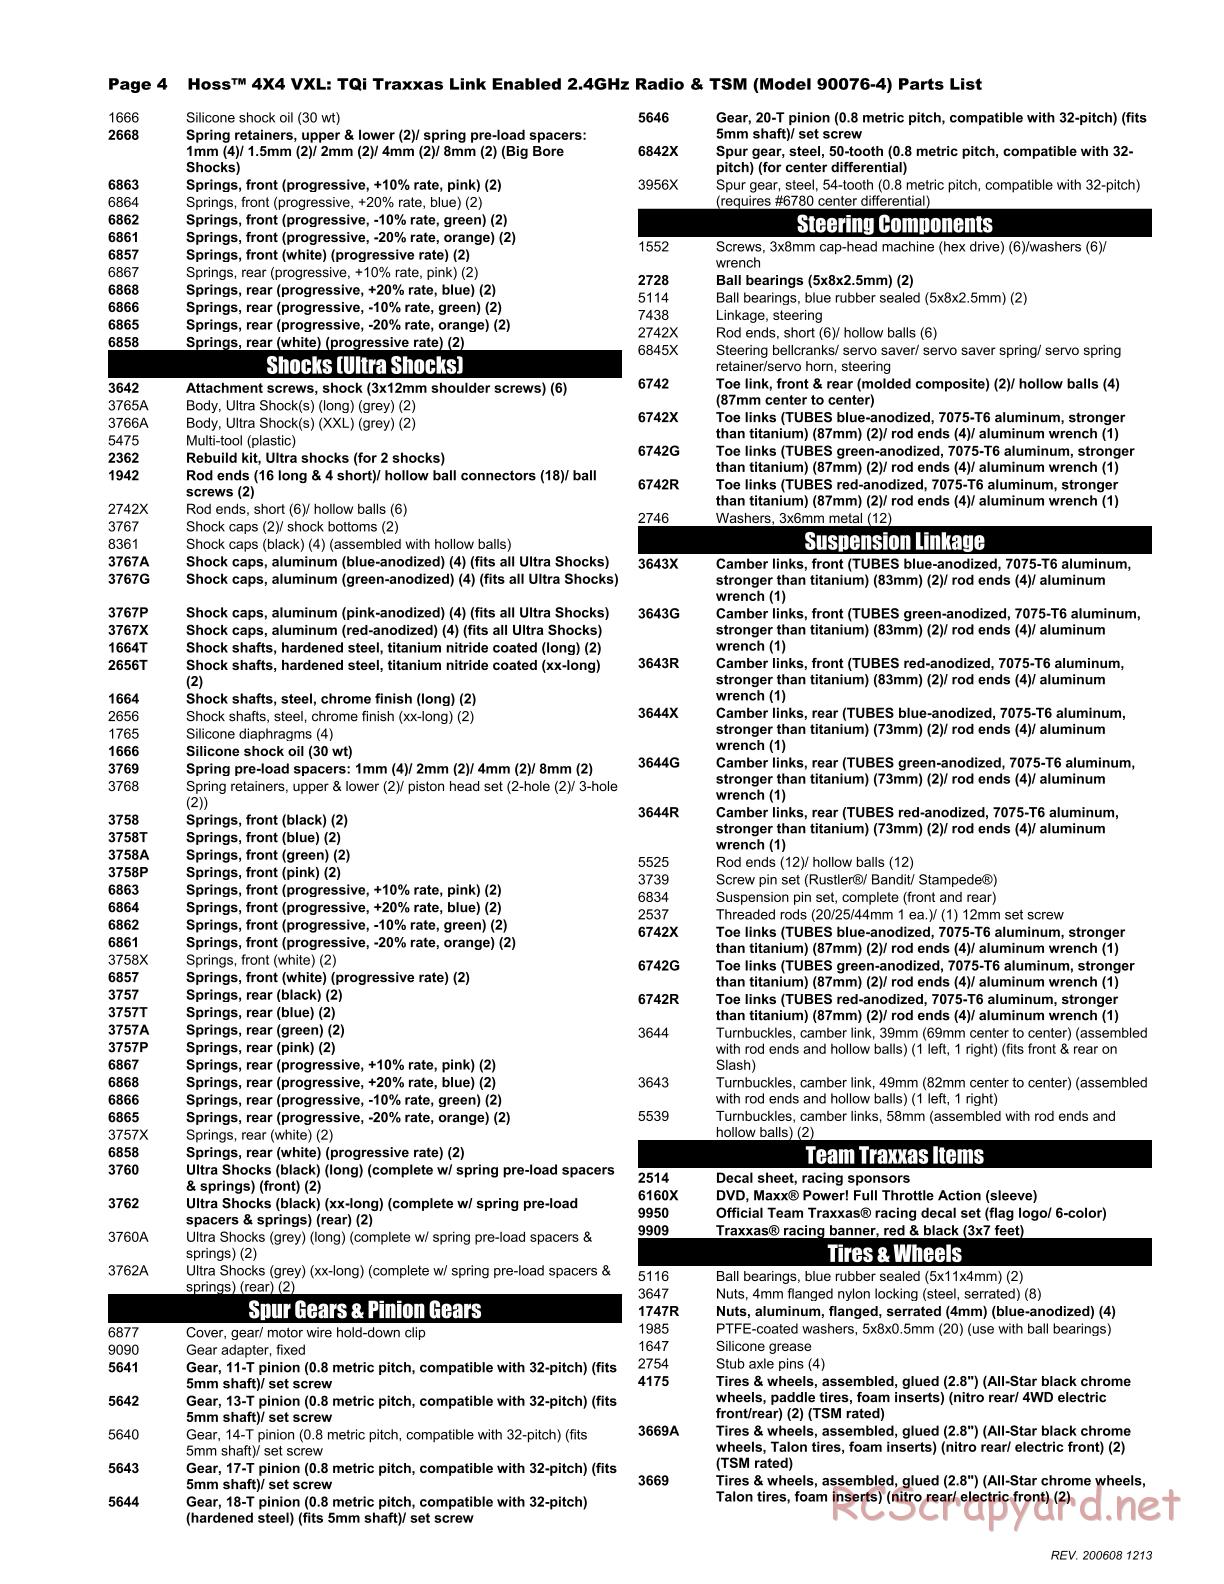 Traxxas - Hoss 4x4 VXL (2020) - Parts List - Page 4